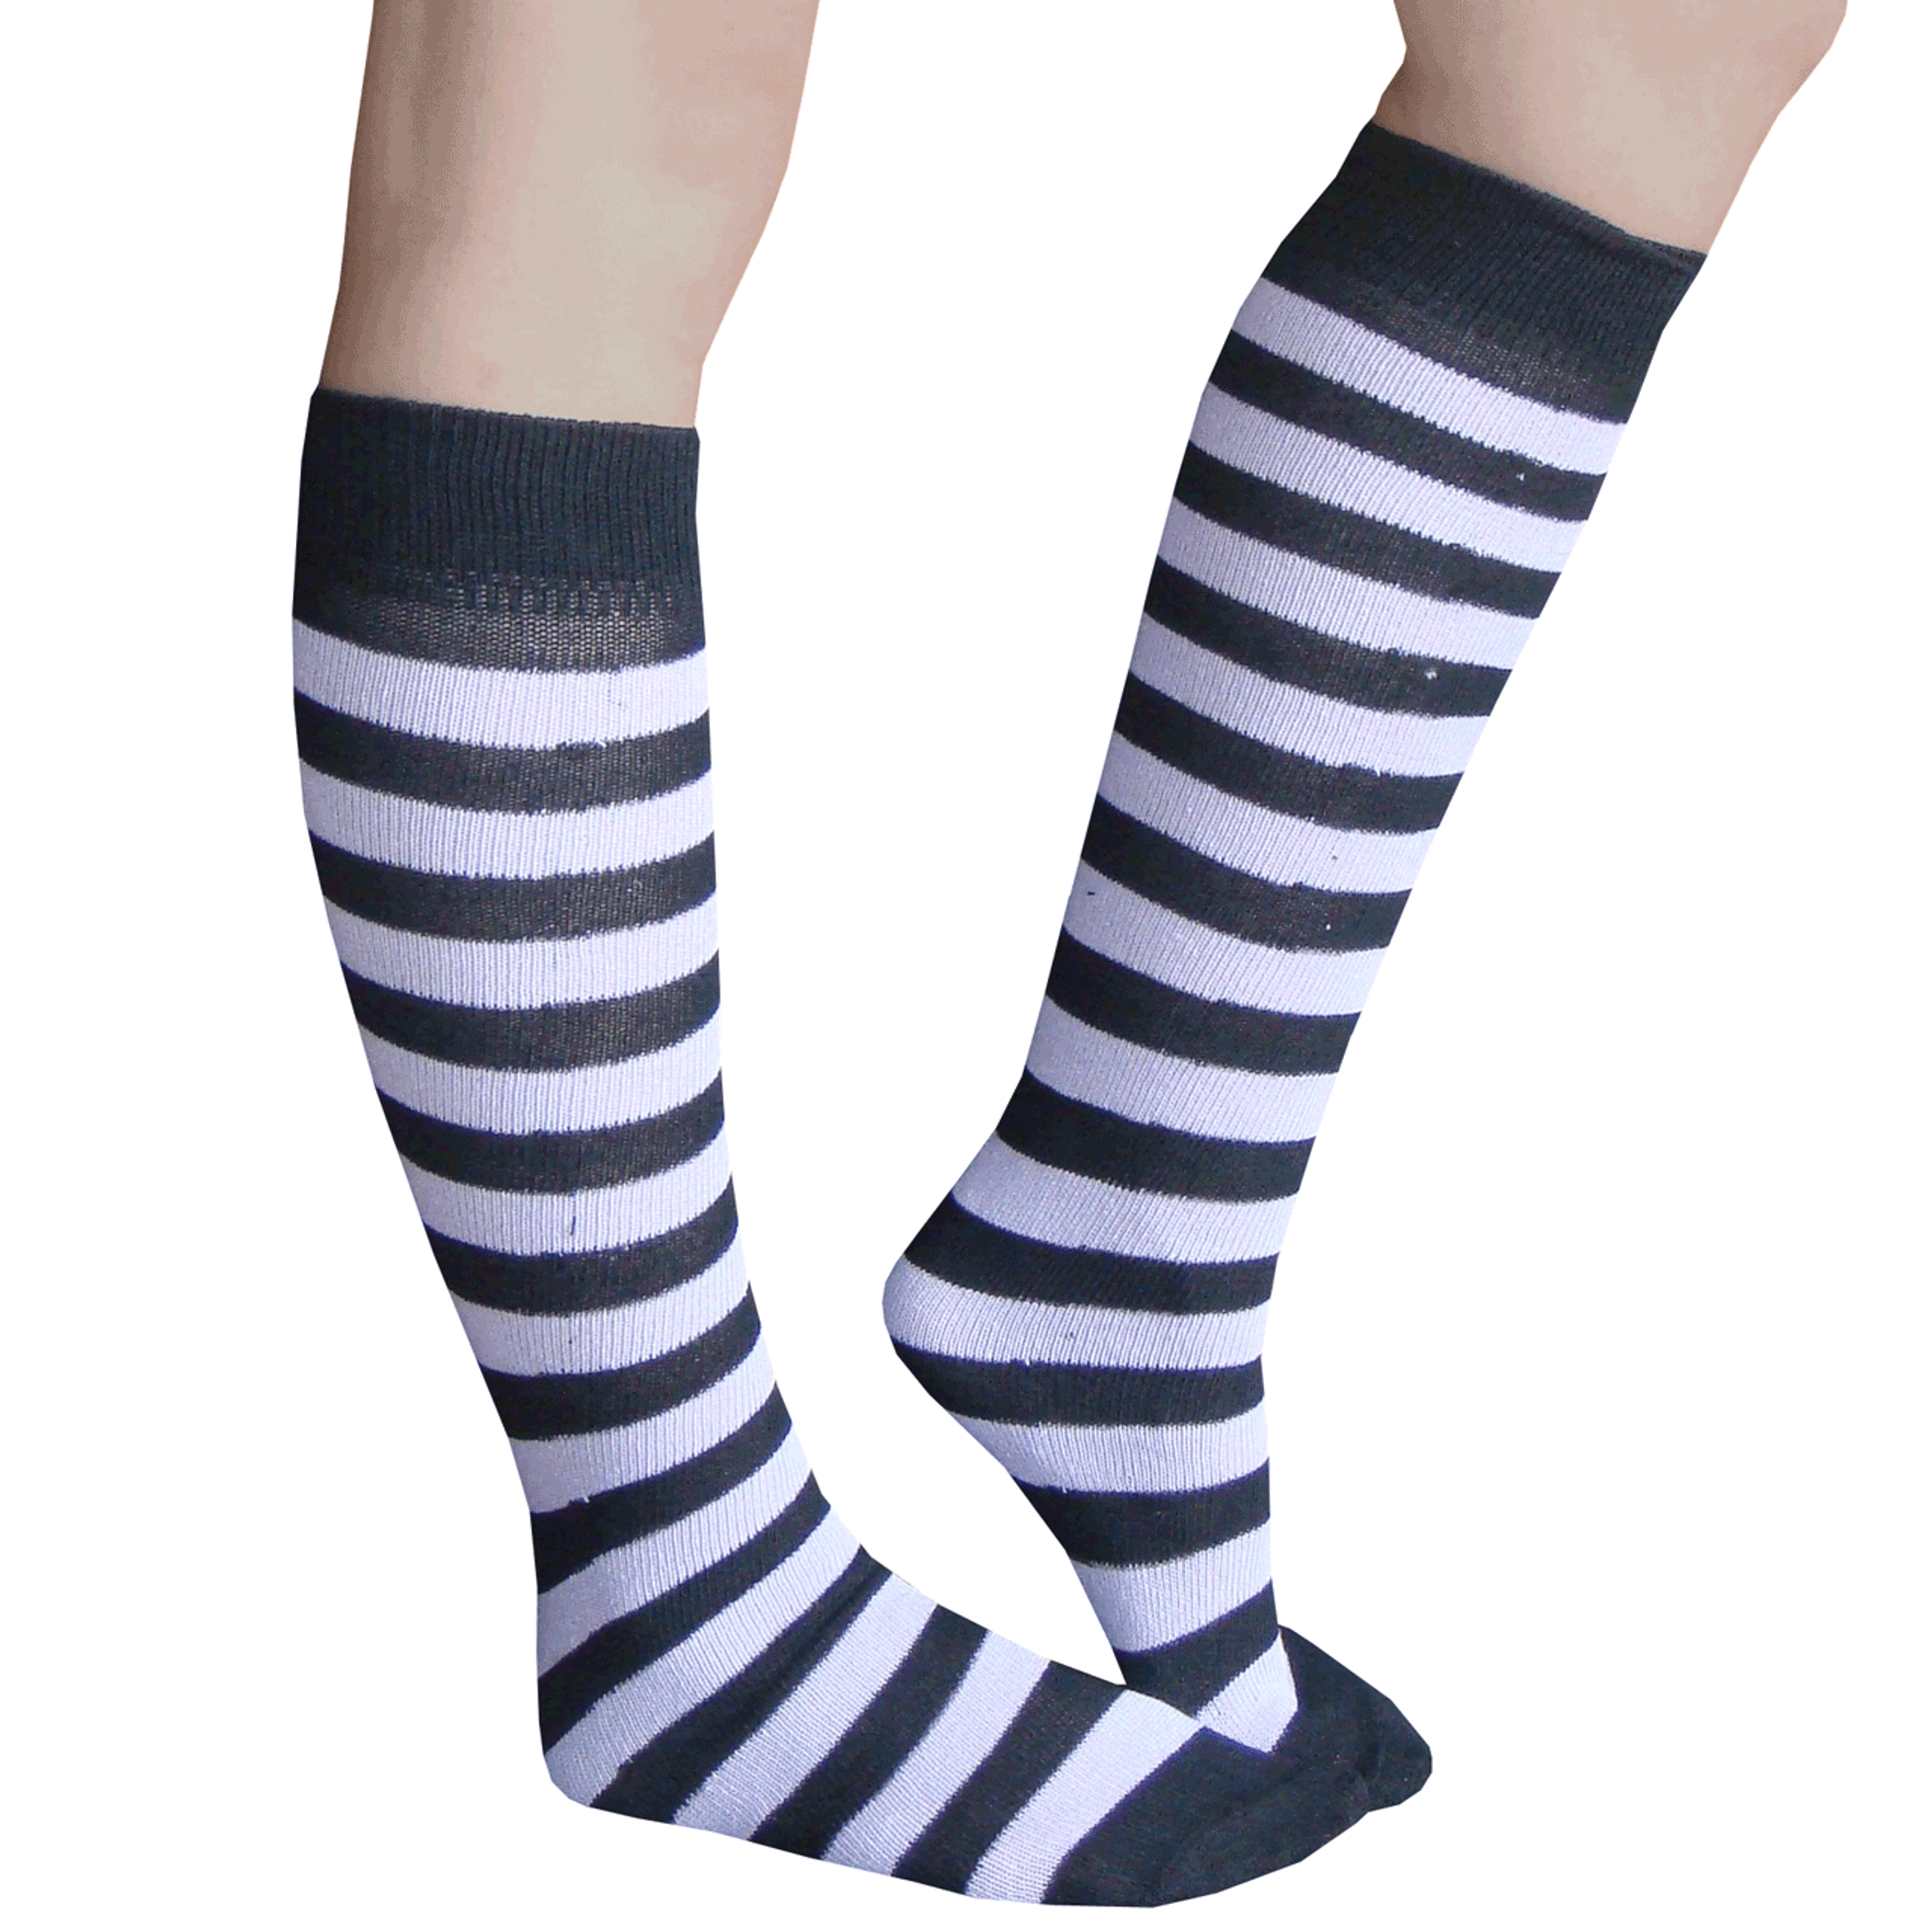 Striped Knee High Socks